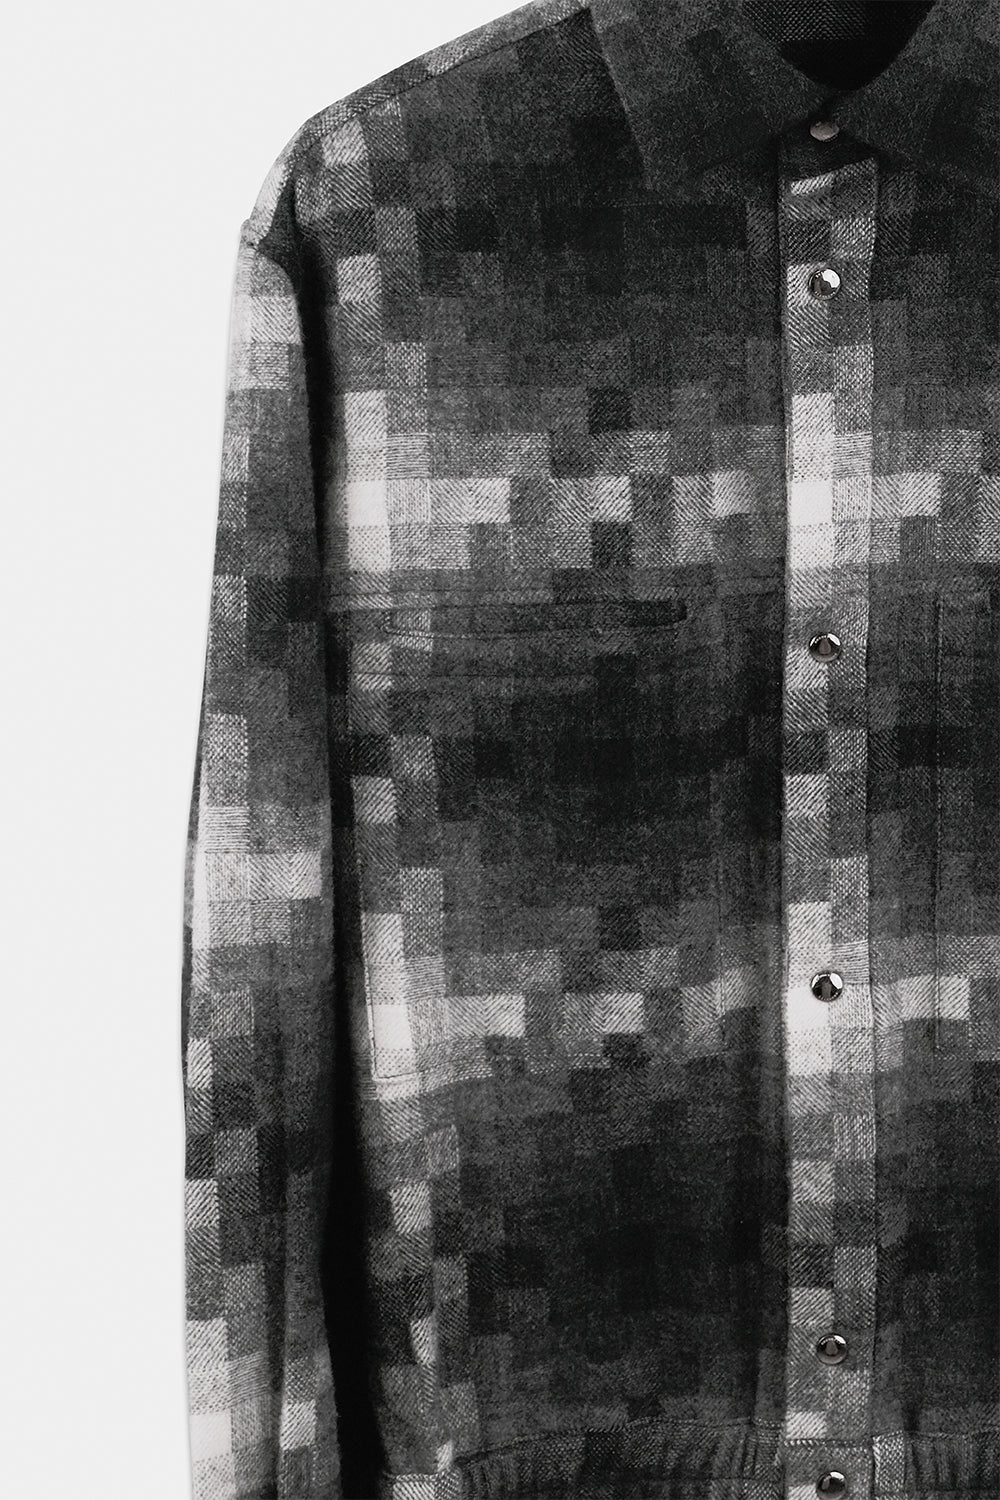 SEANNUNG - MEN - Plaid Pattern Wool Jacket Look Shirt 格紋毛料外套式襯衫